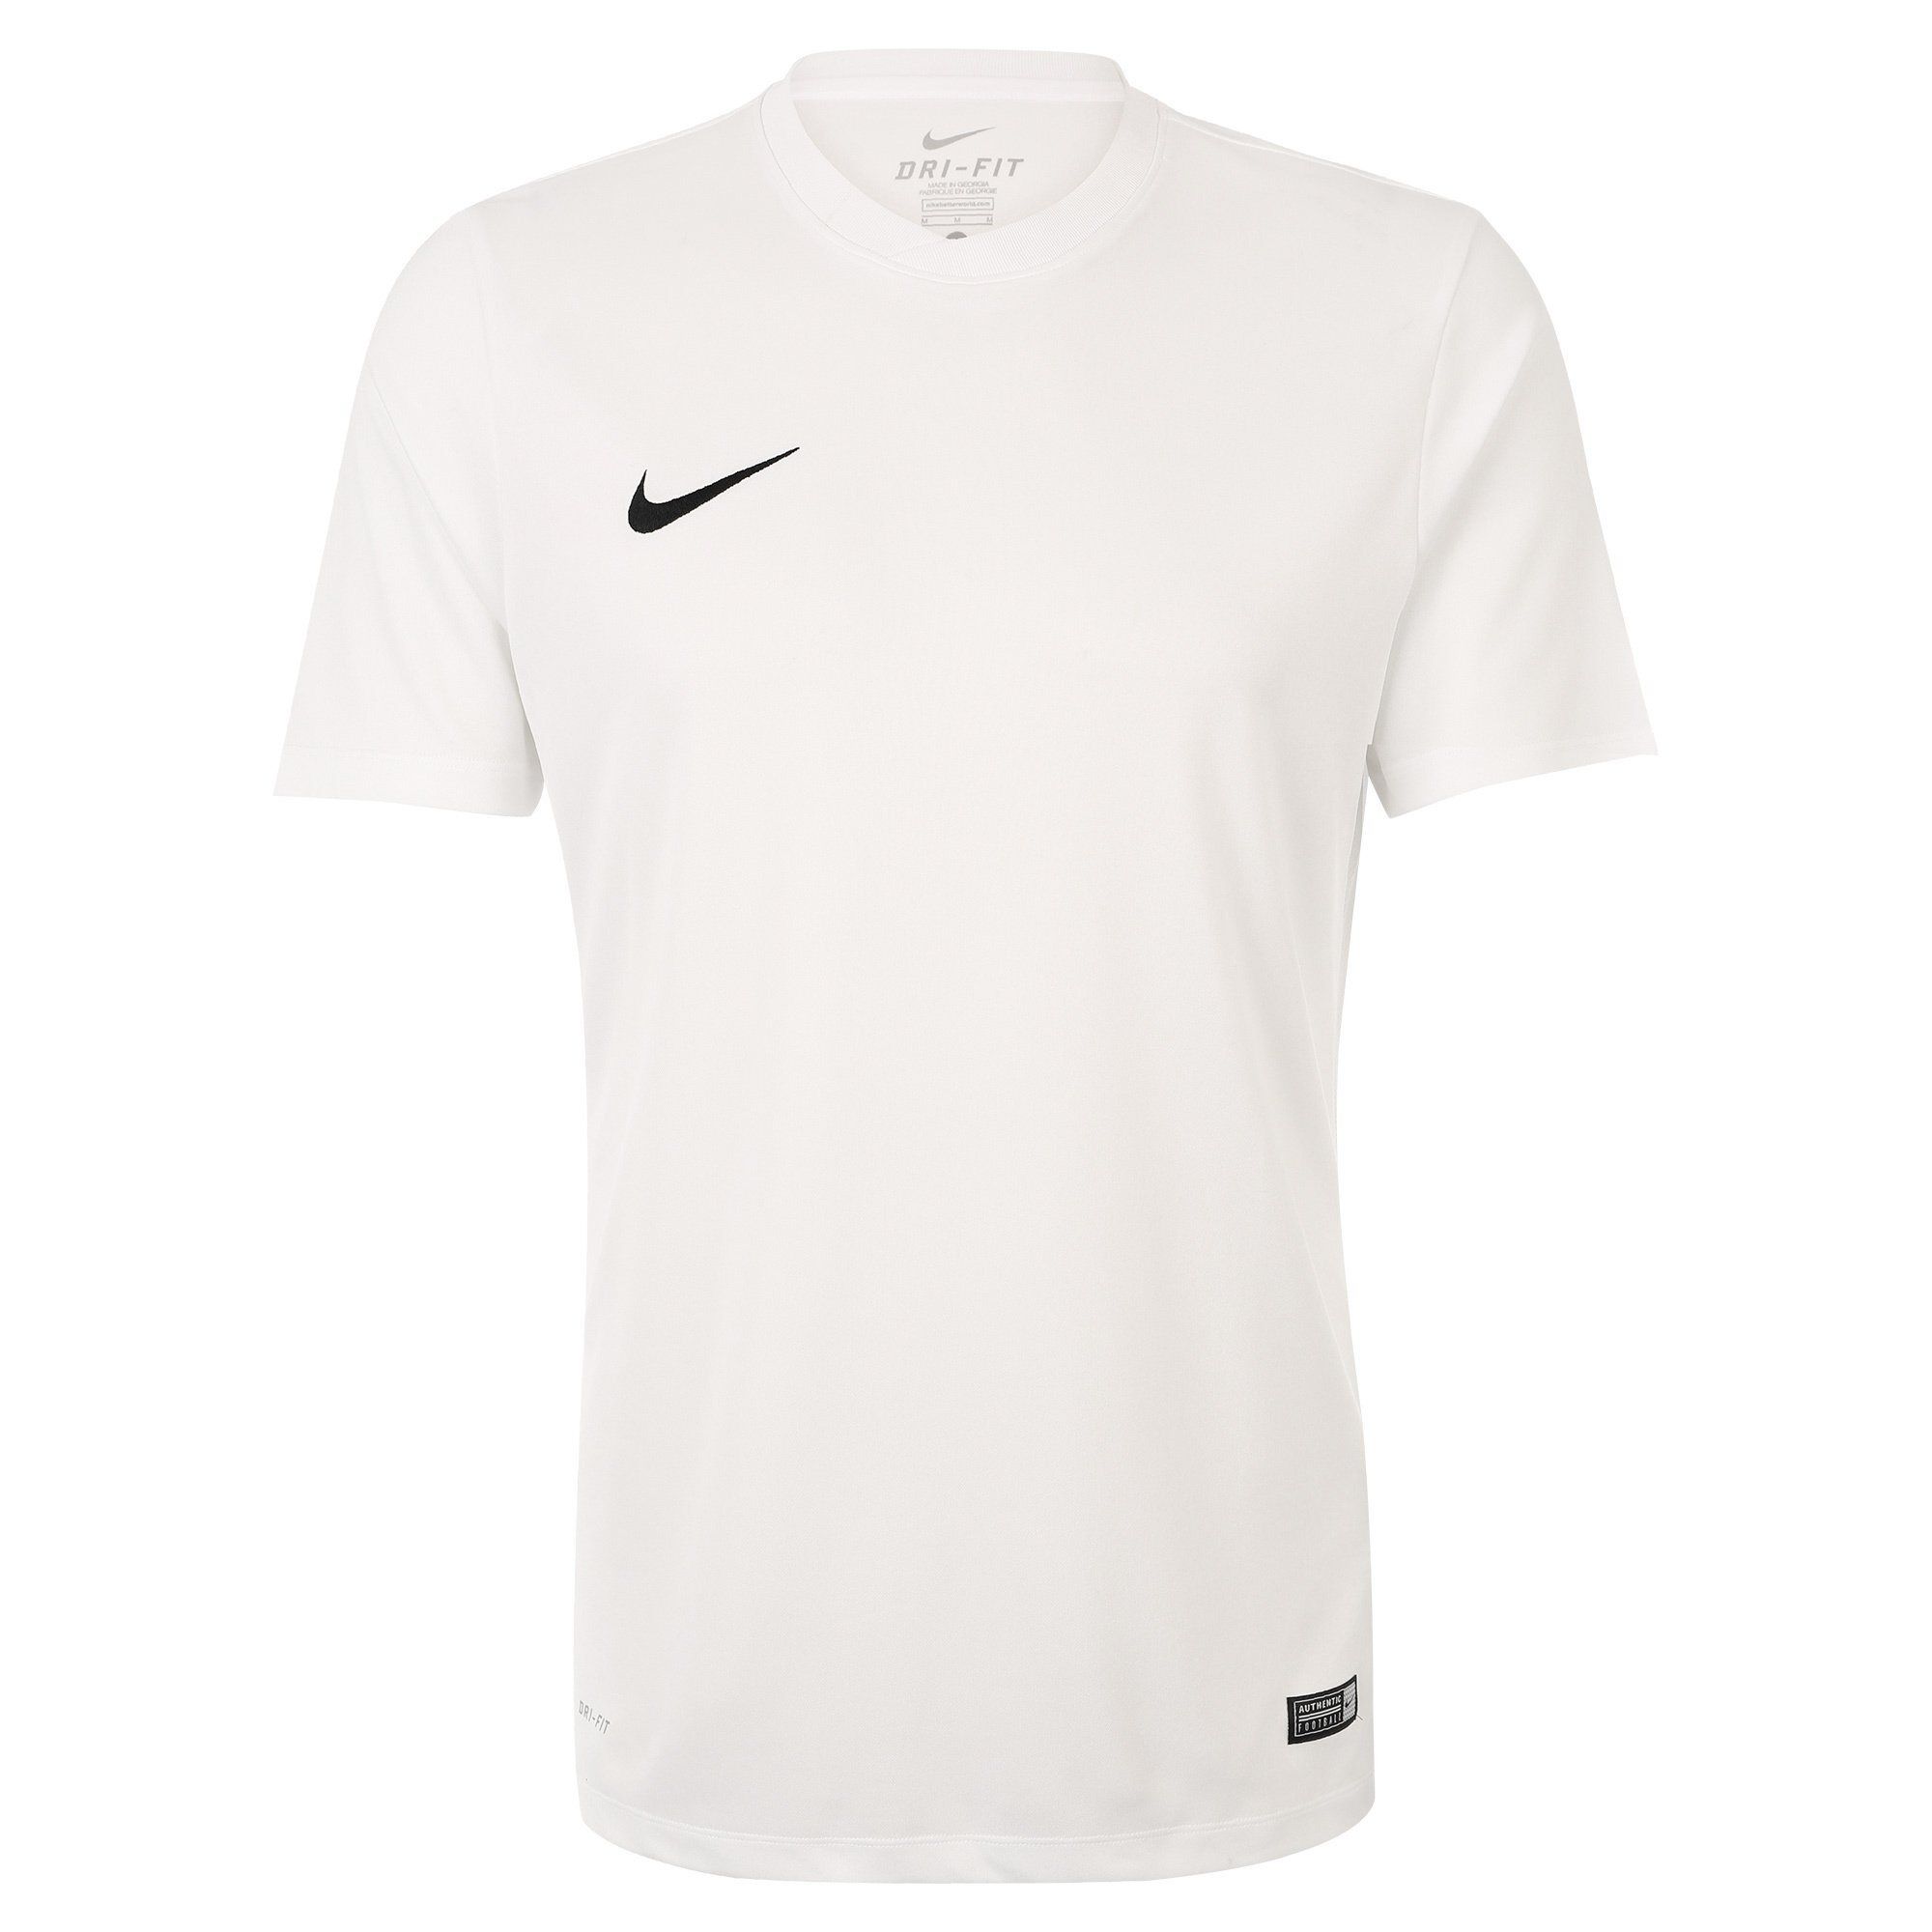 Nike Trikot »Park Vi«, weiß-schwarz